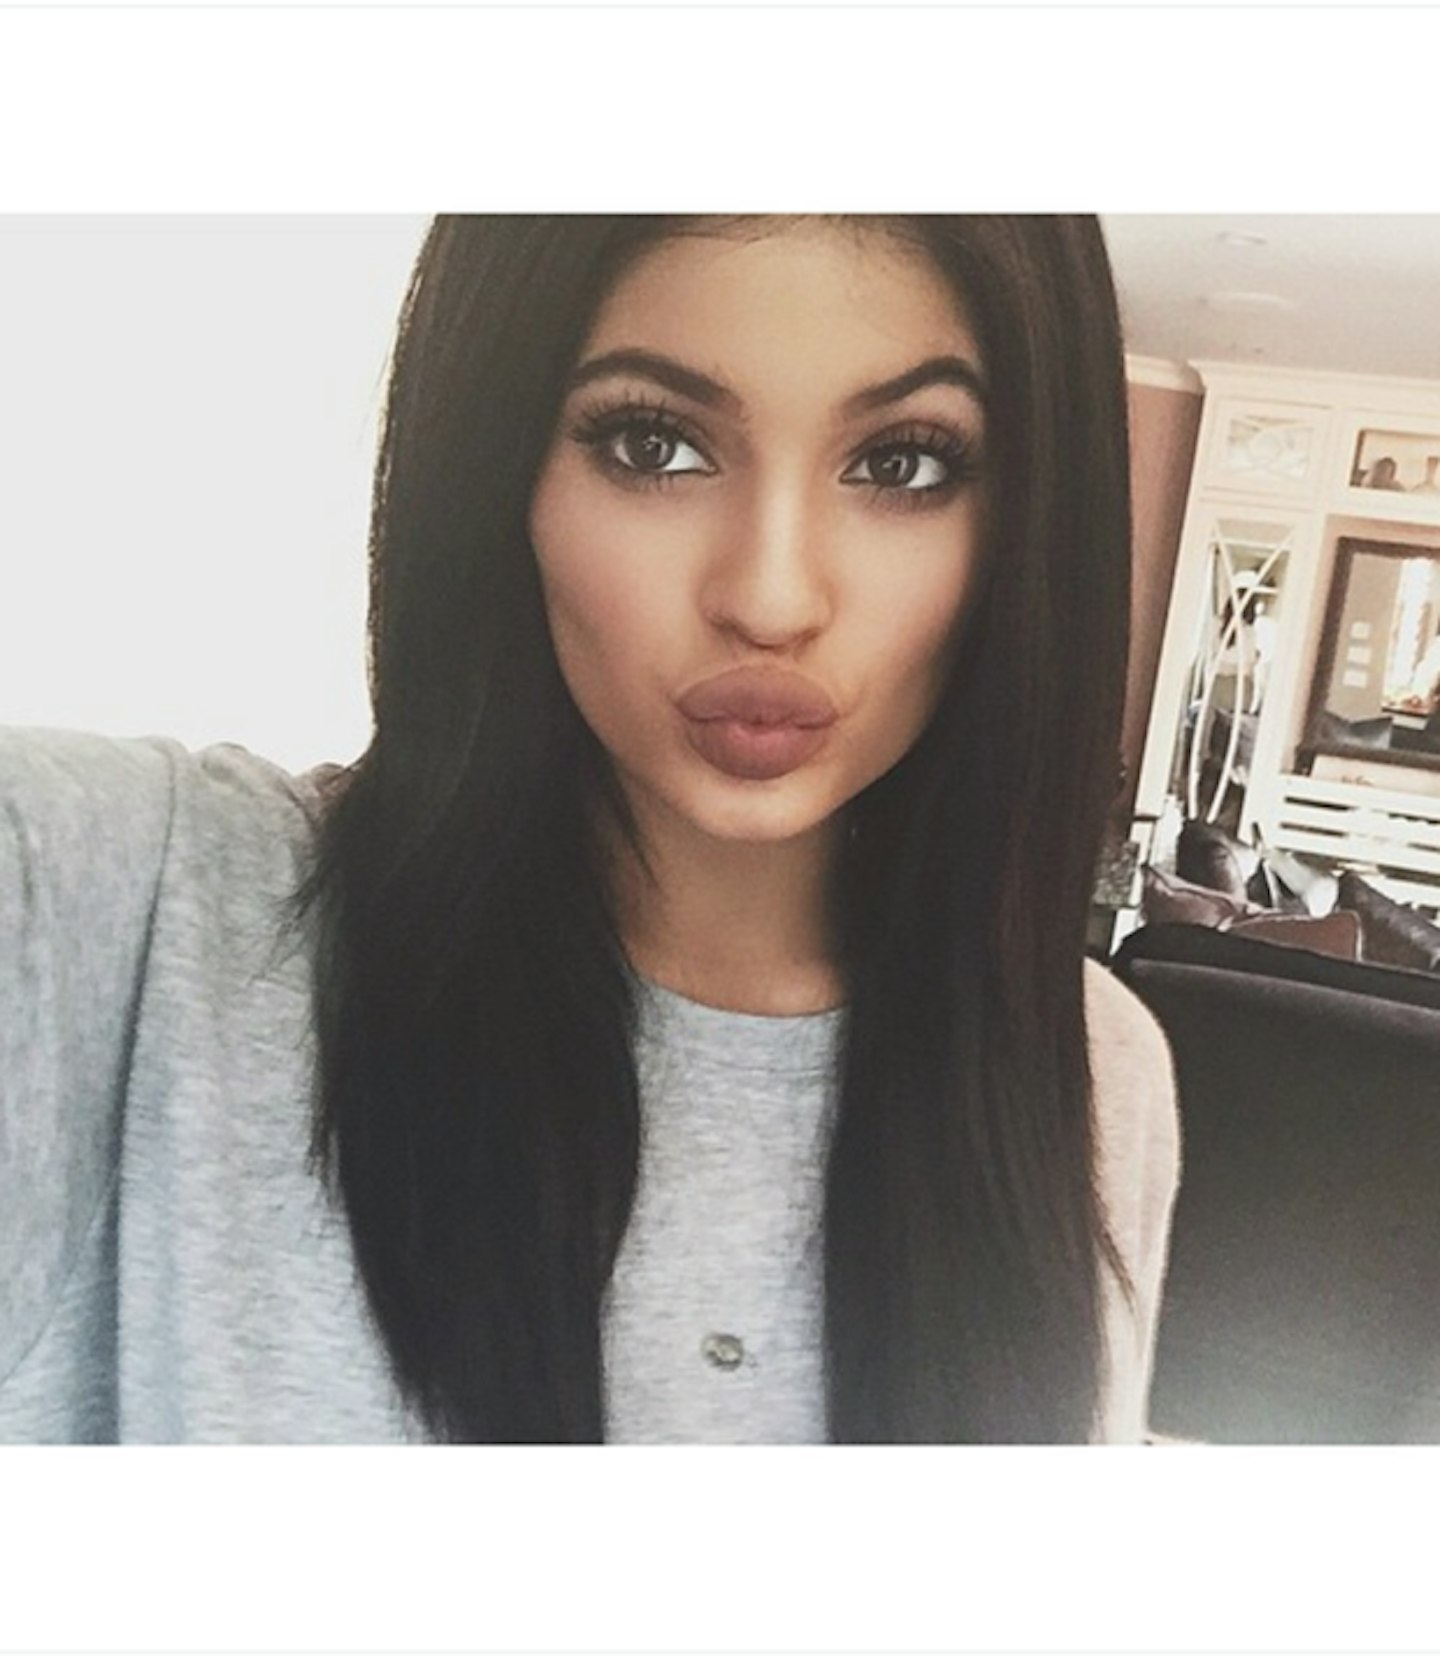 Wednesday: Kylie Jenner